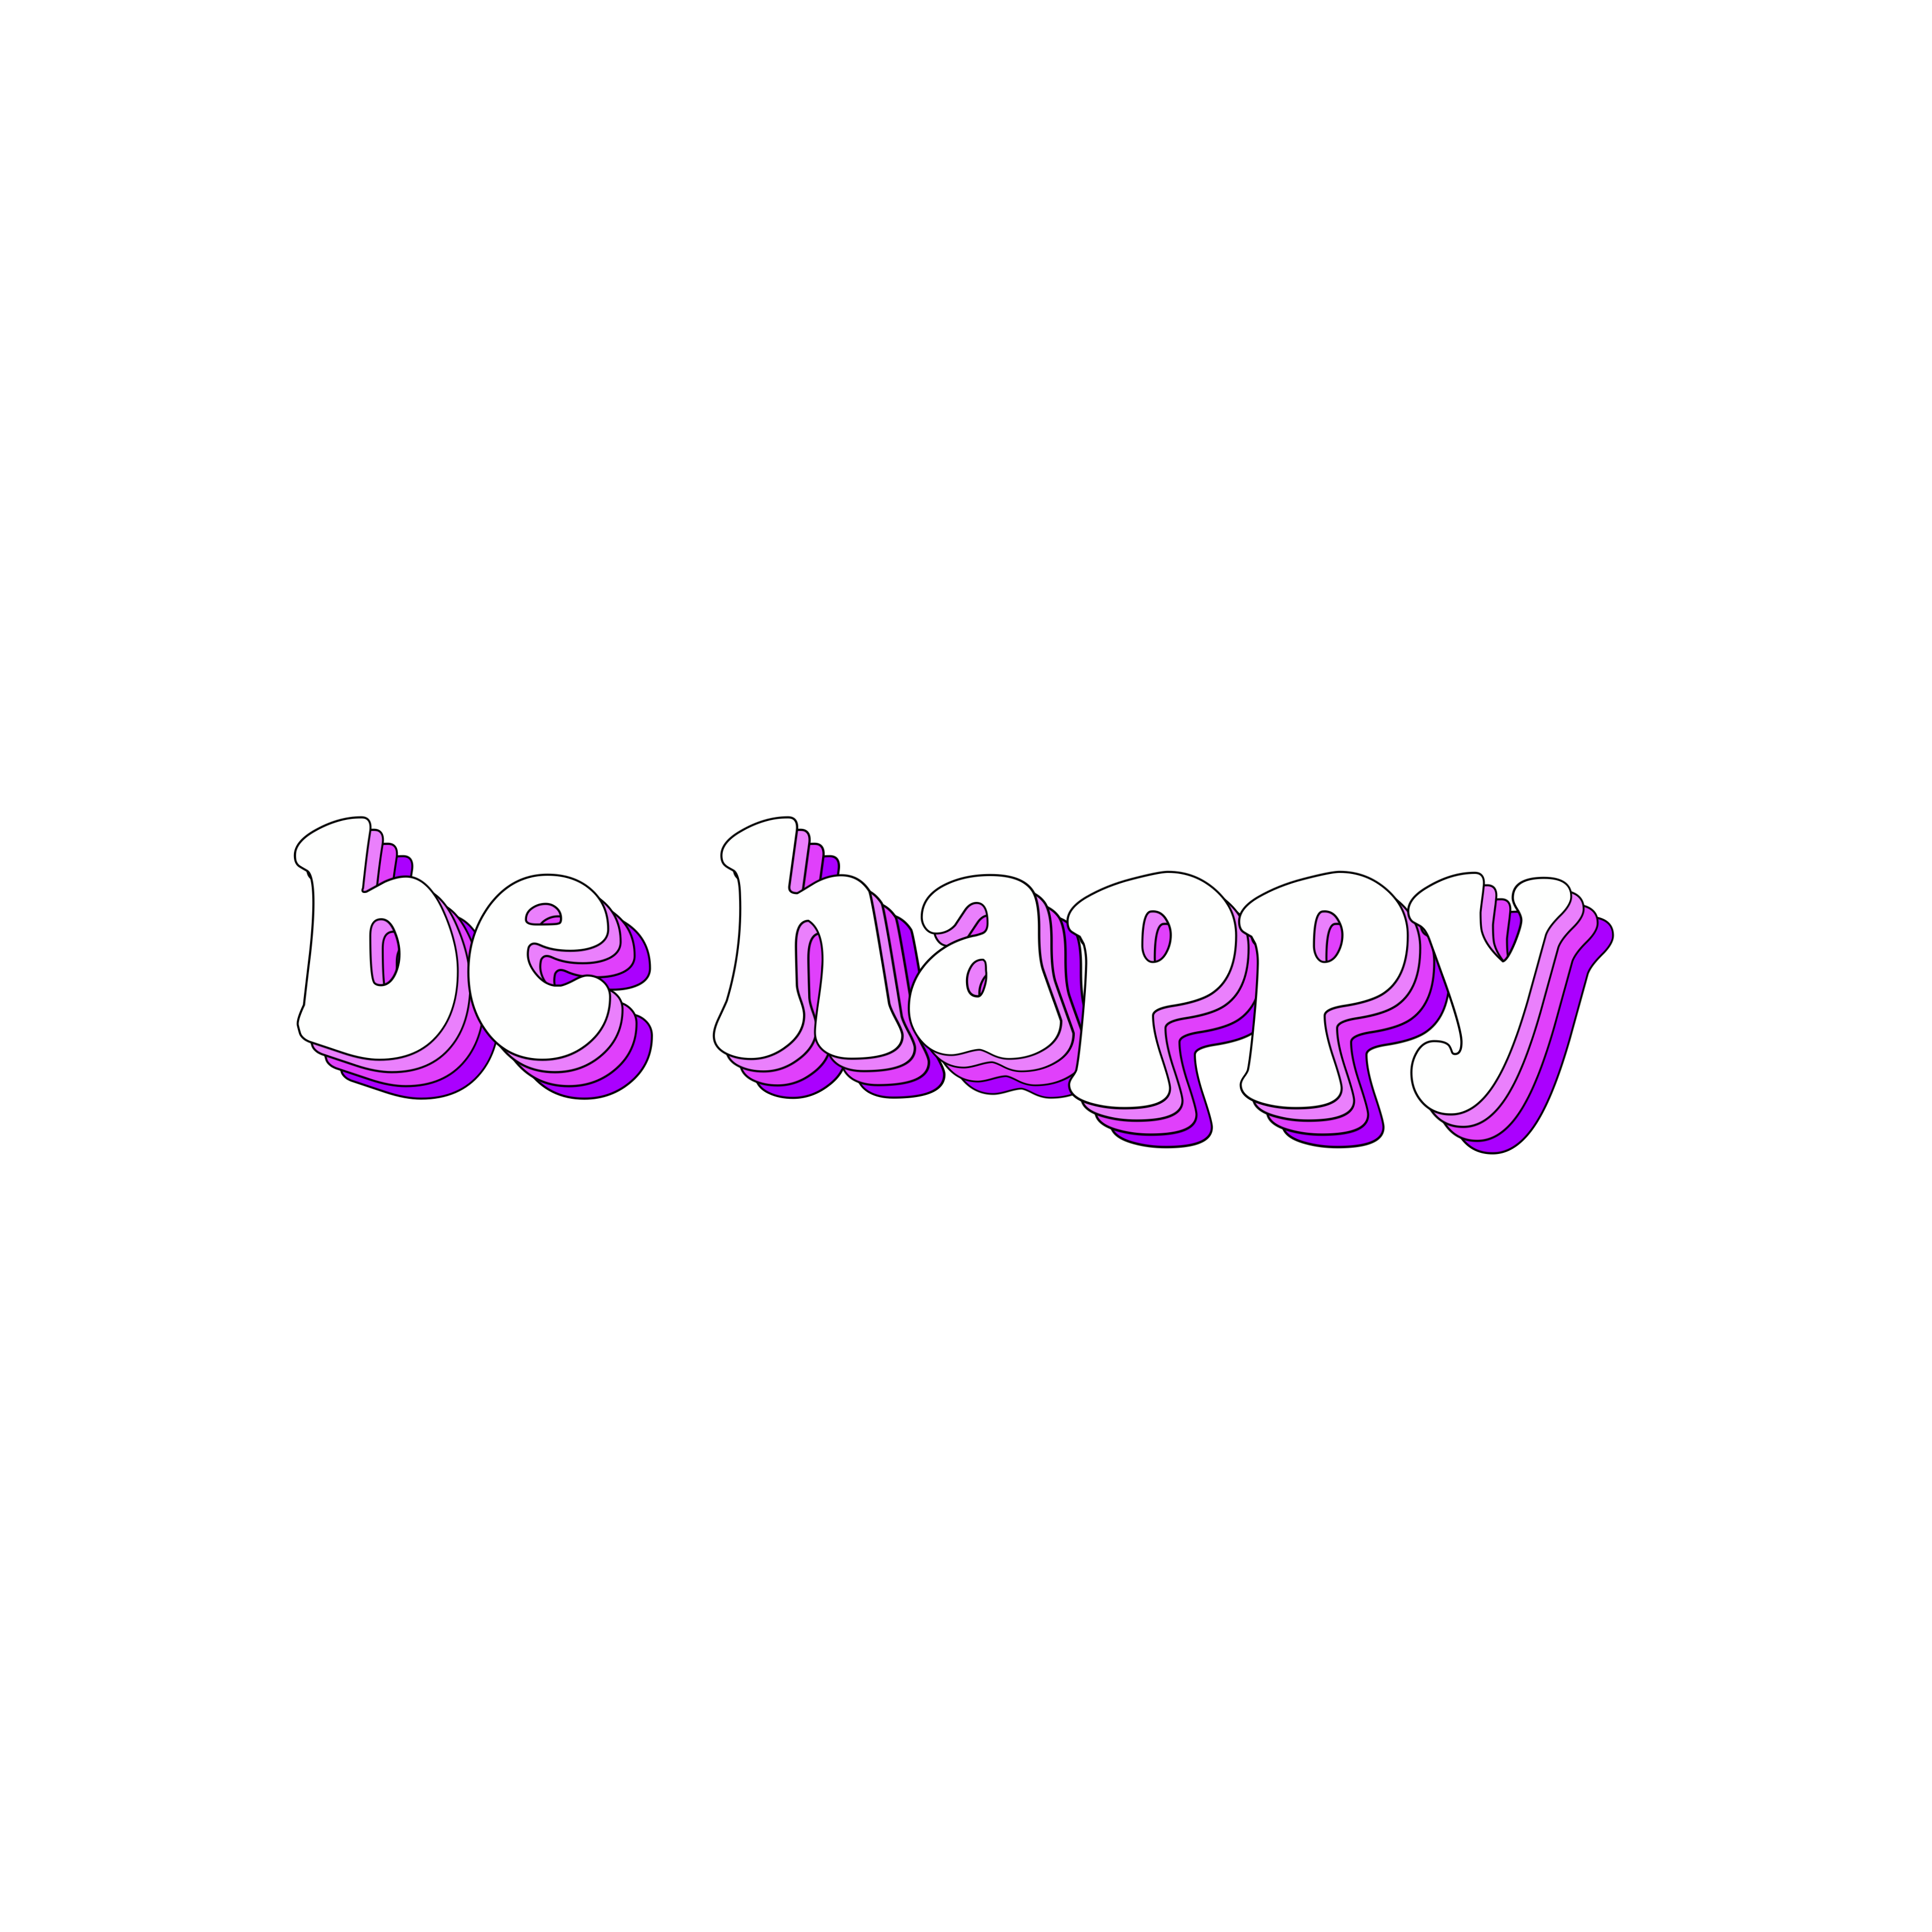 behappy words quote freetoedit #behappy sticker by @minkb179